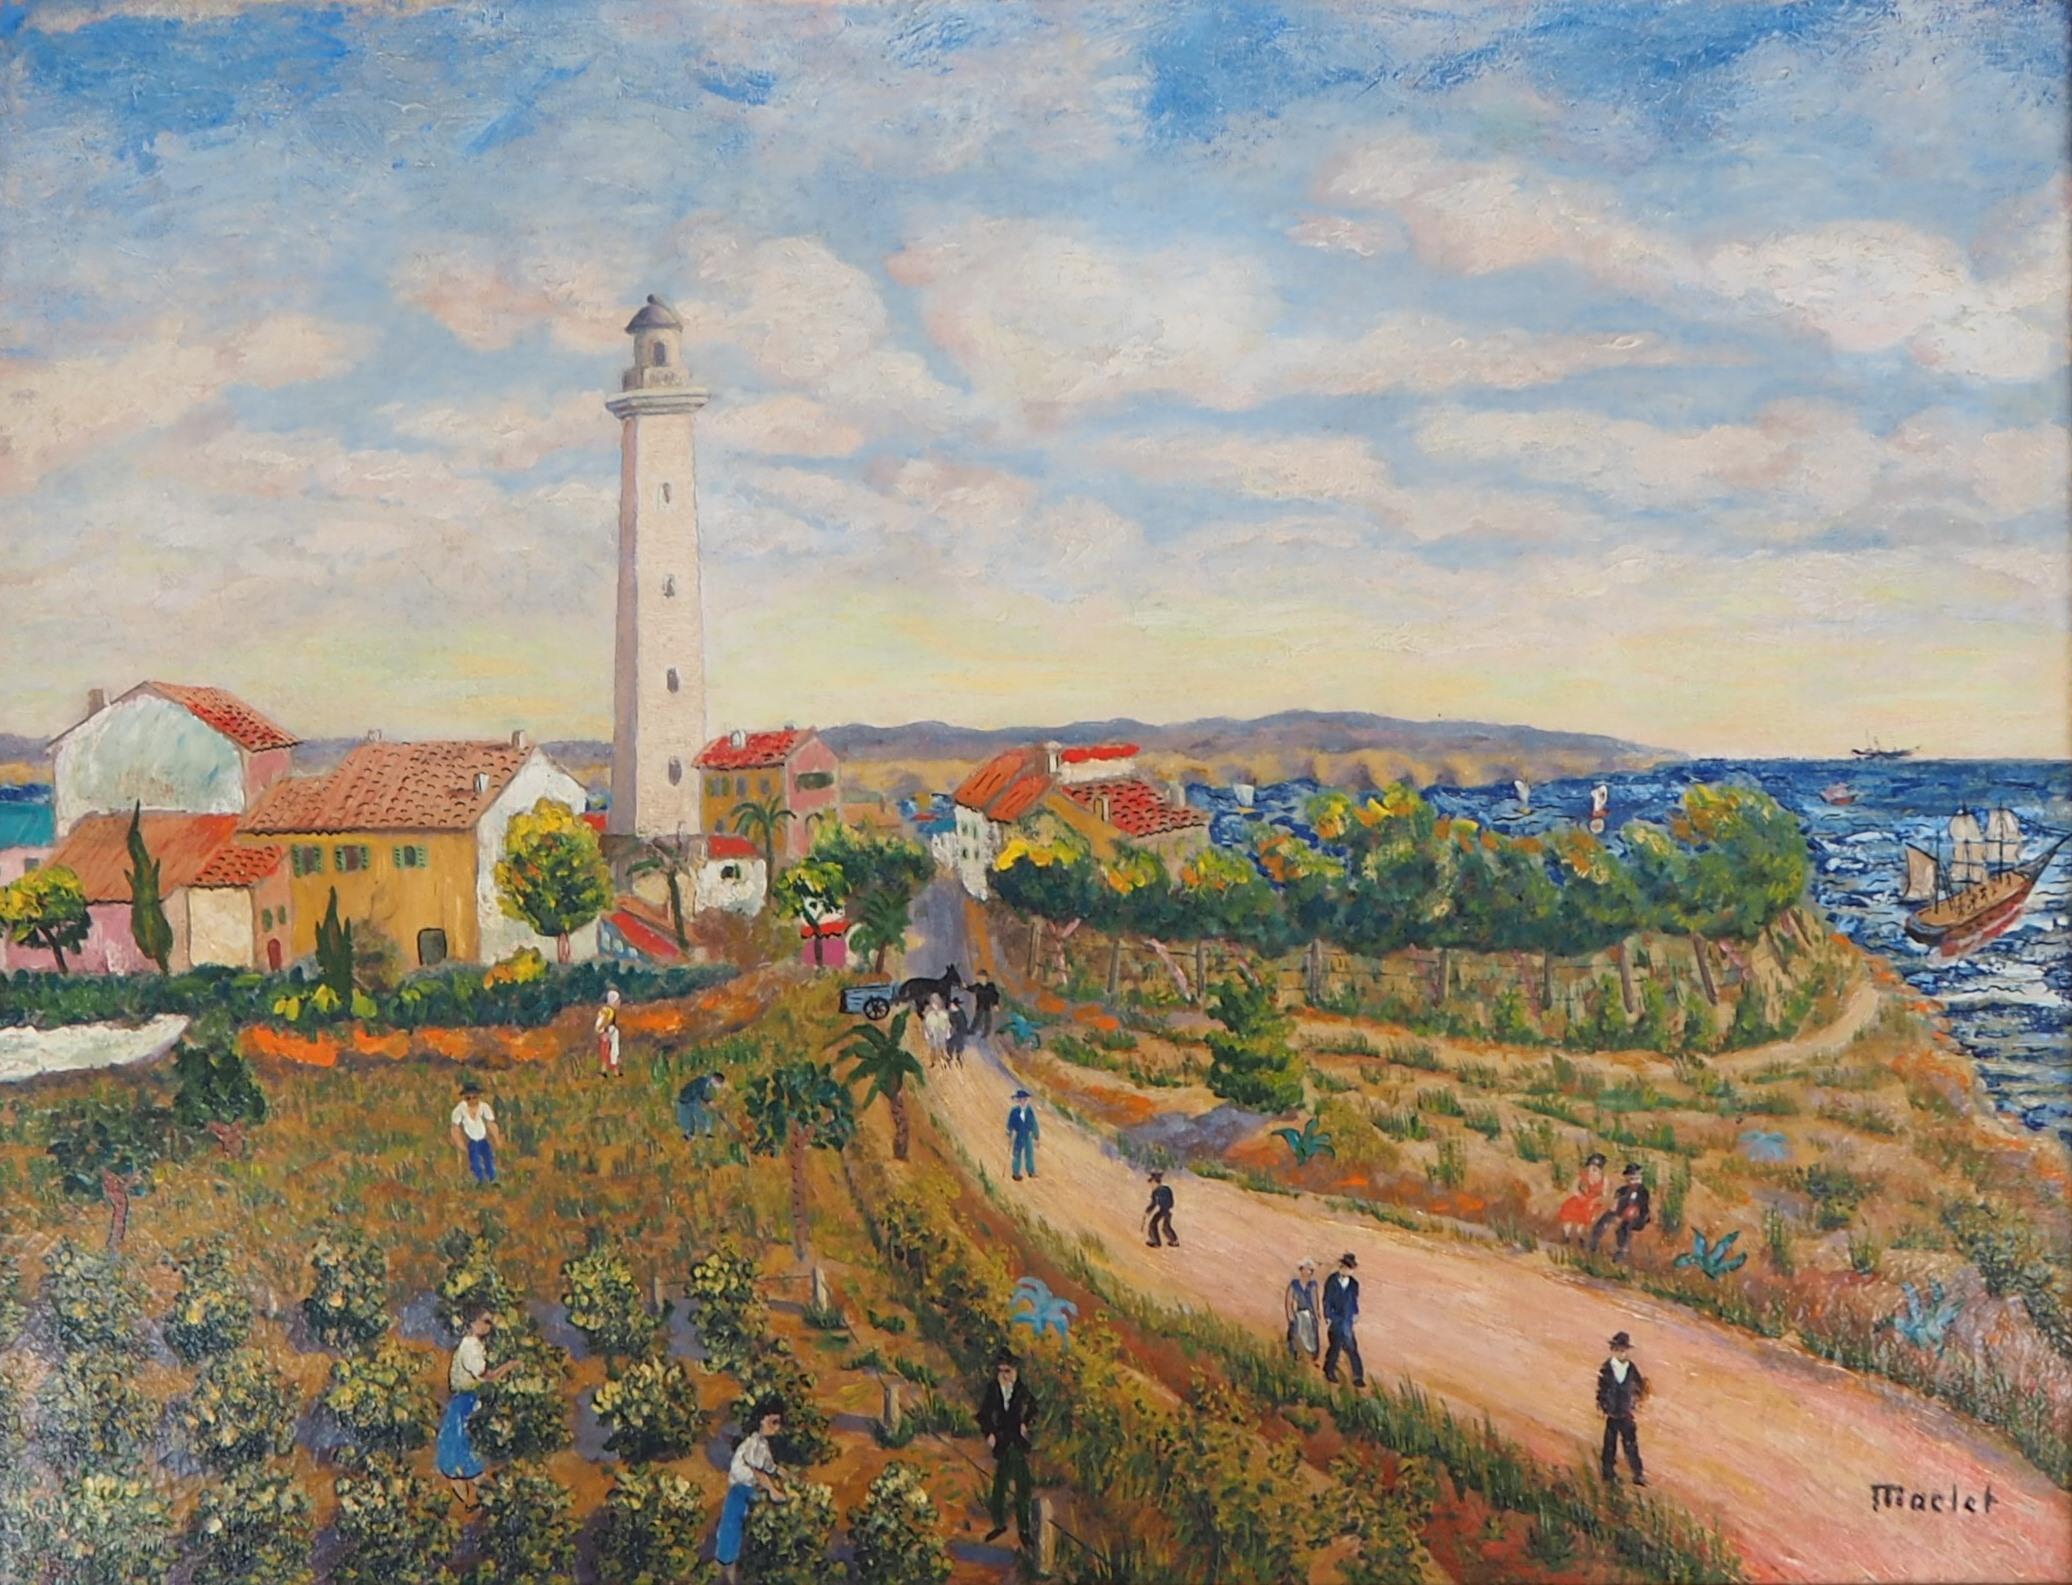 Elisée Maclet Landscape Painting - Landscape with a Lighthouse - Original Oil on Canvas, Handsigned, c. 1930